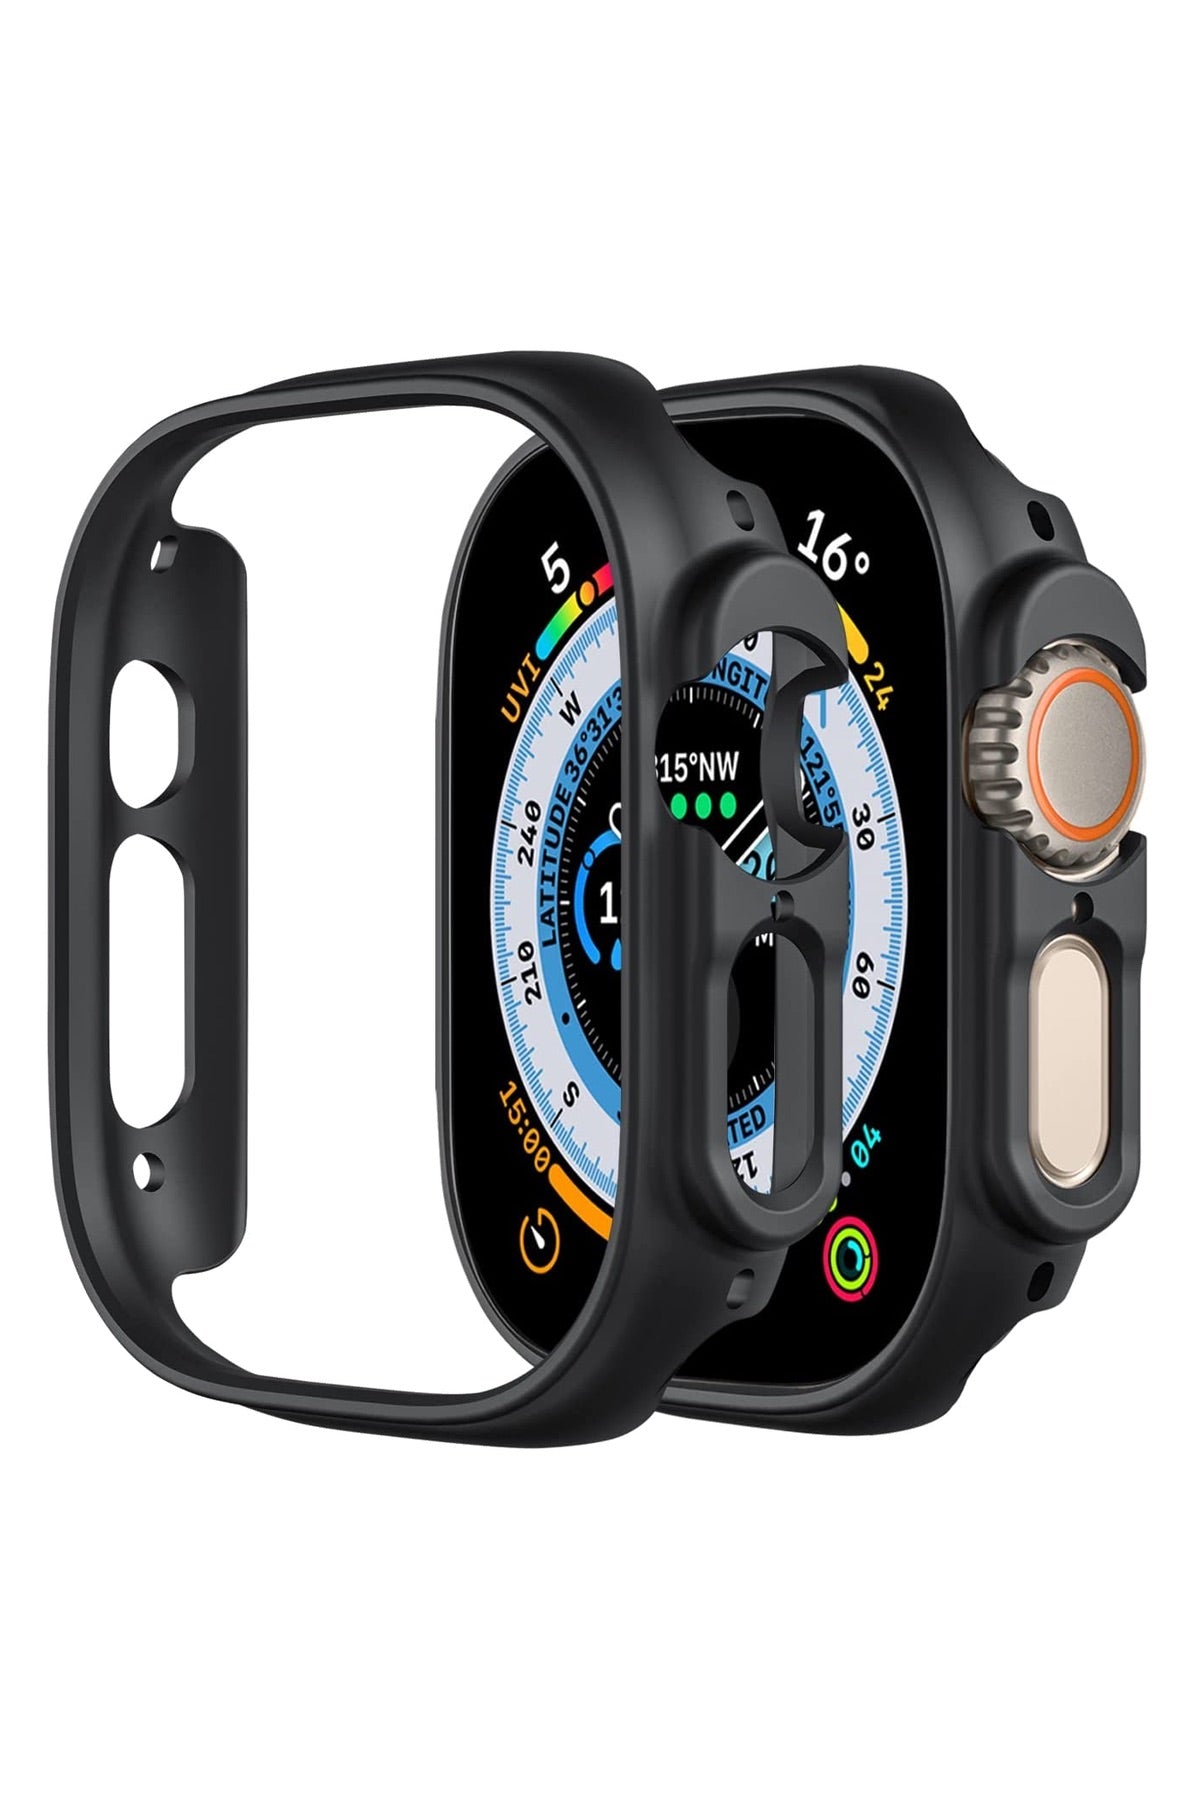 Apple Watch Ultra Compatible Case Protector Black Bumper 